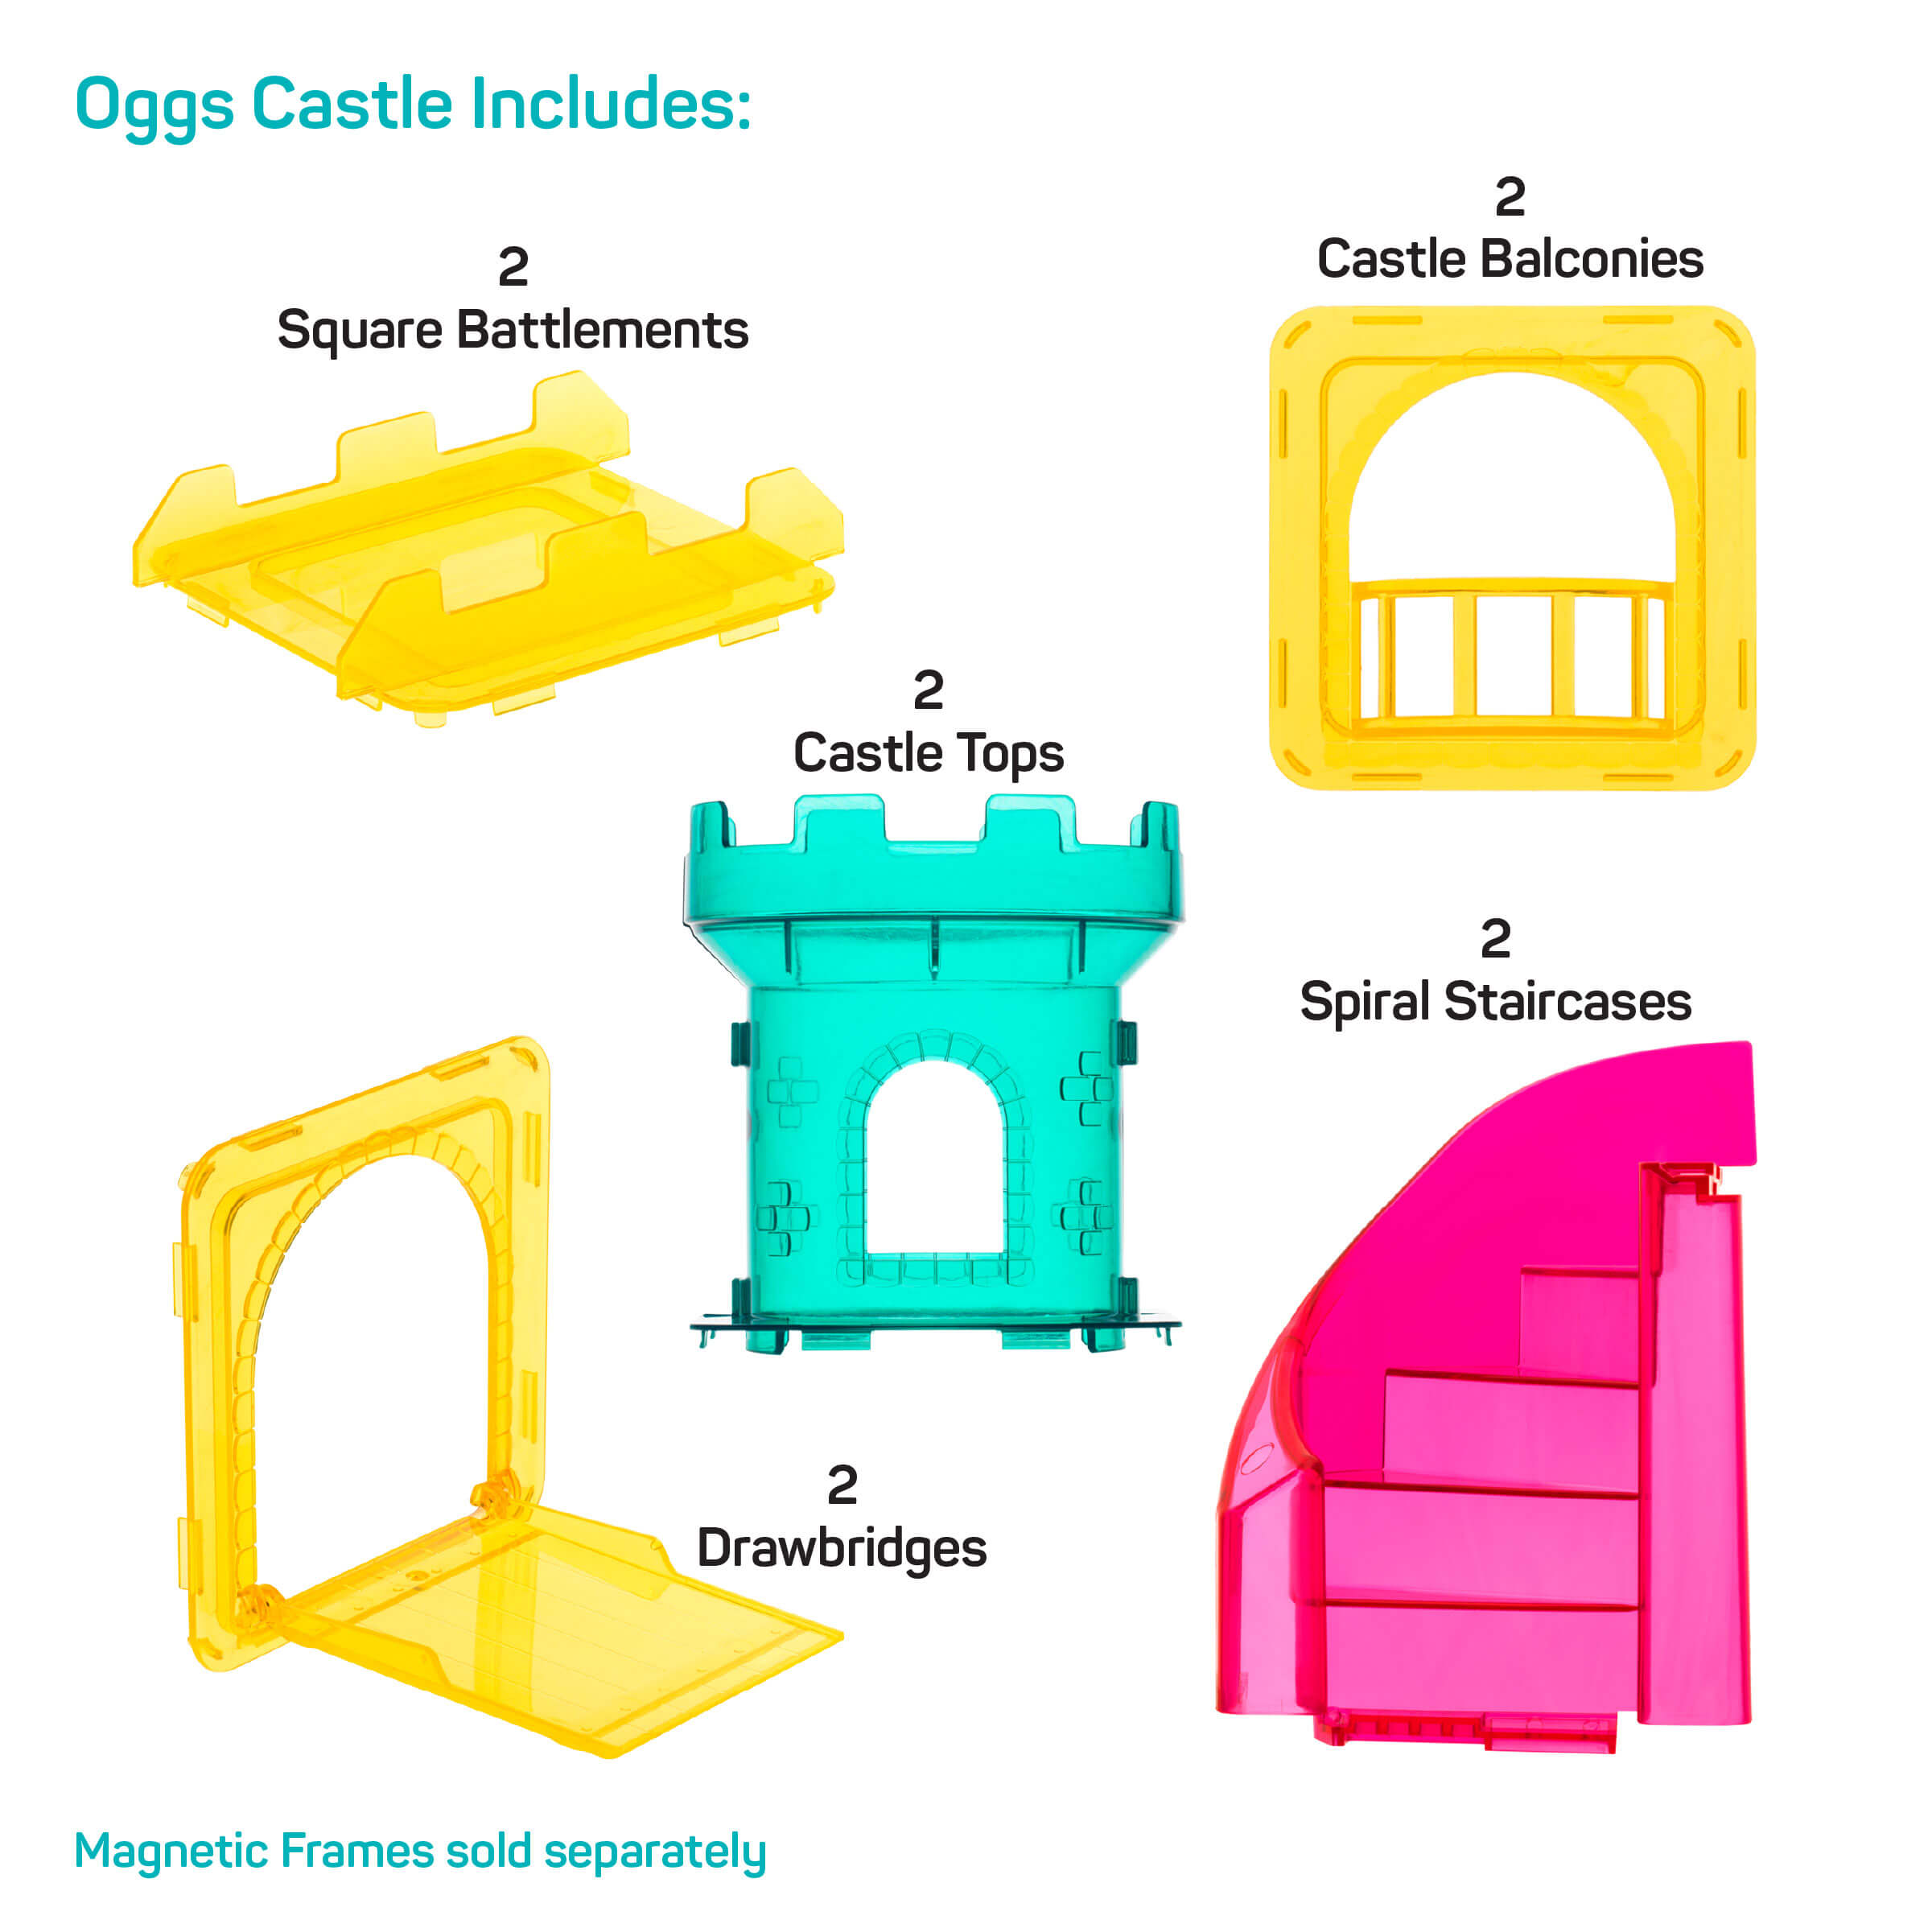 Oggs Castle